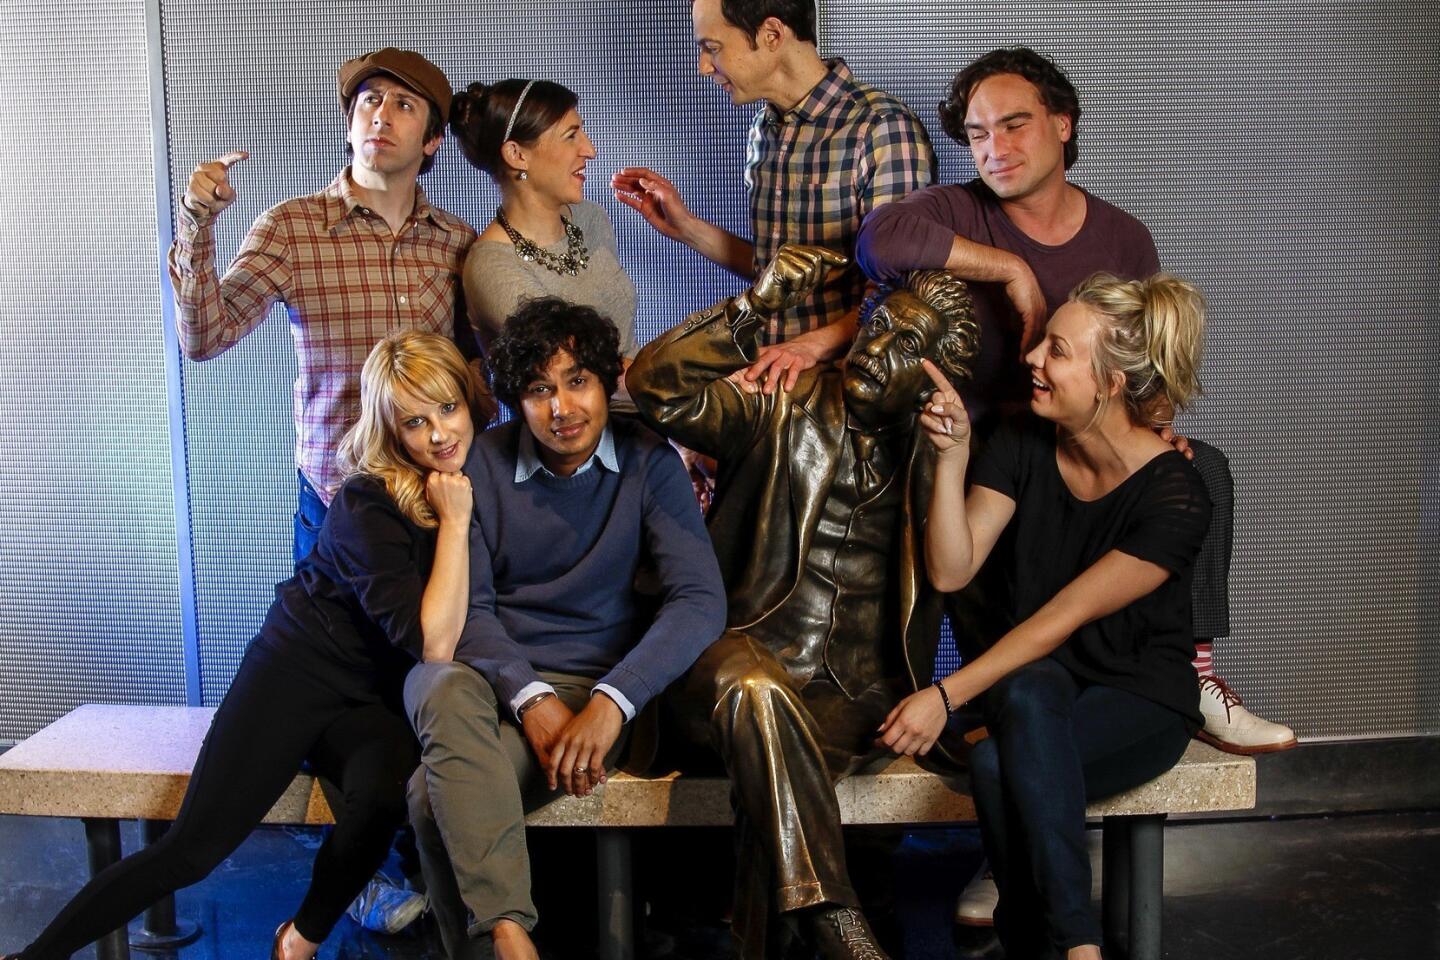 "The Big Bang Theory" cast